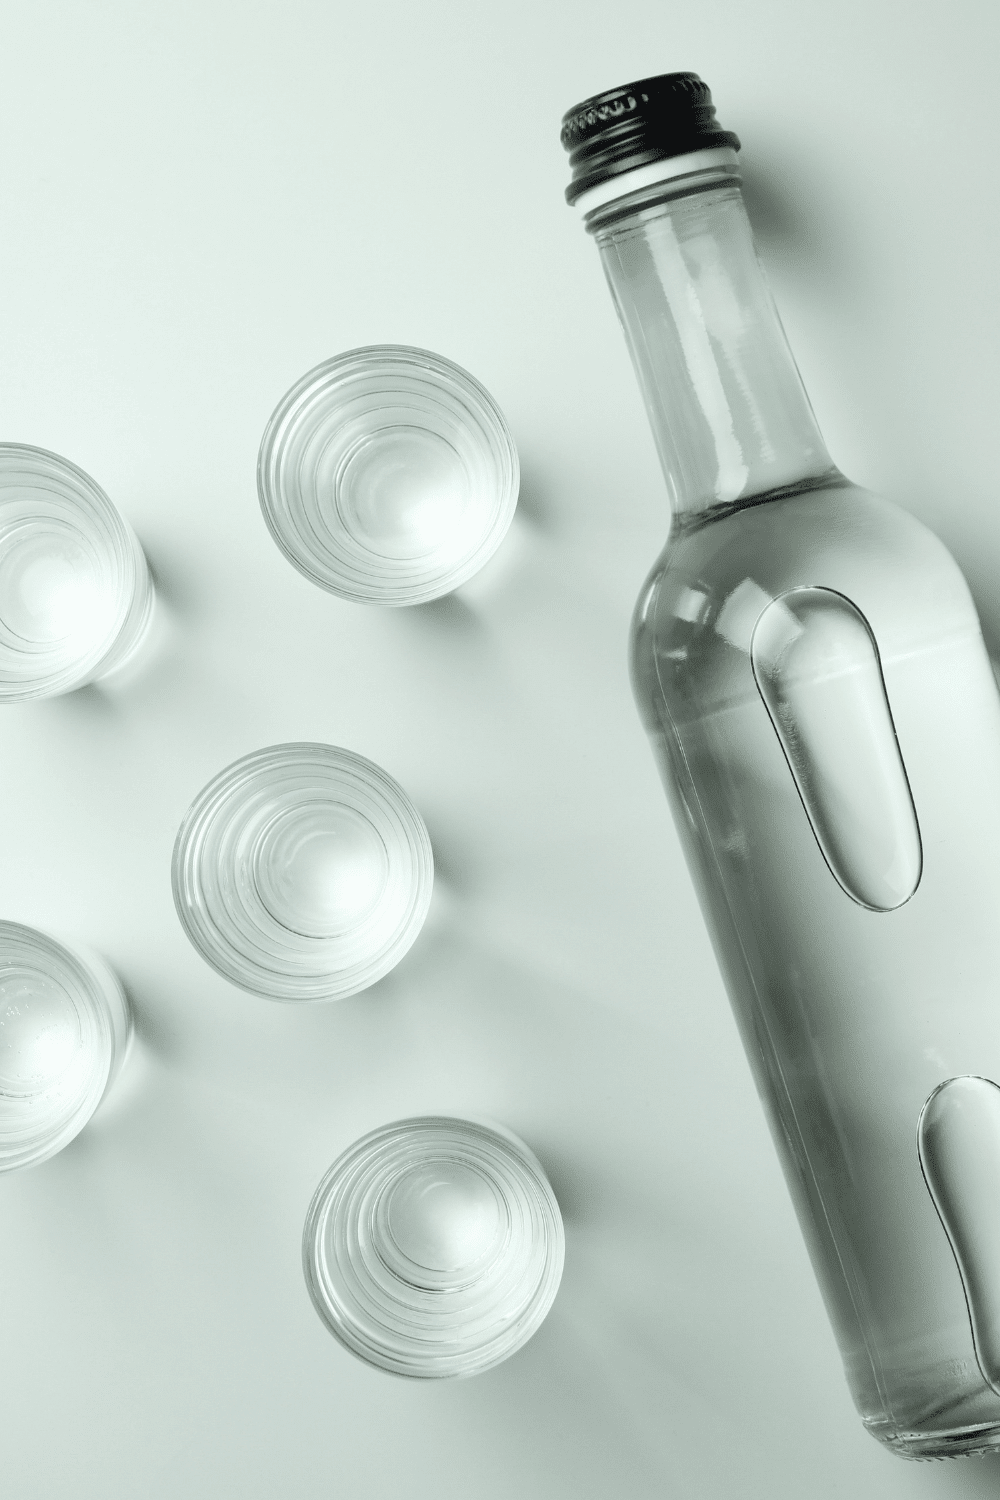 Bottle of clear liquor next to shot glasses. 